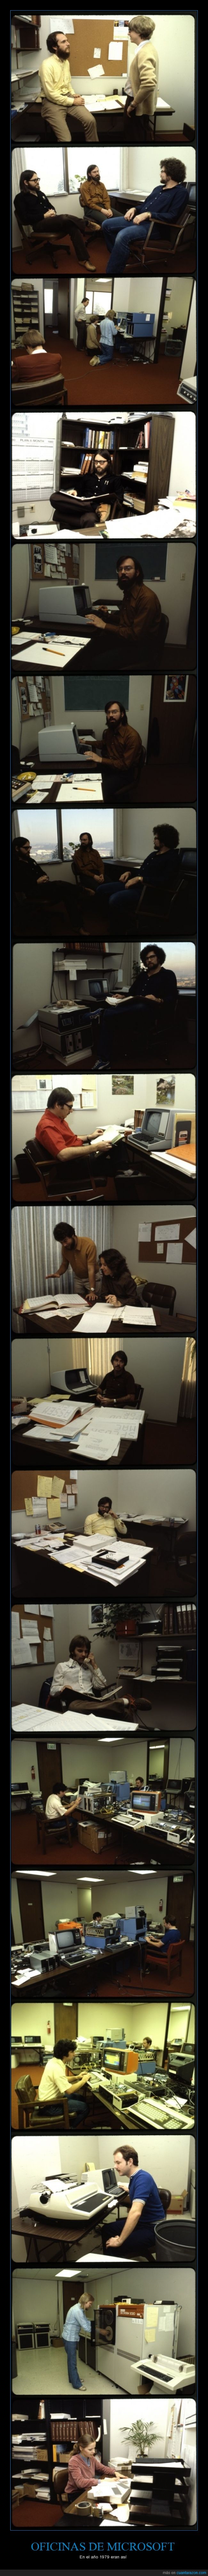 oficina,retro,microsoft,joven,Bill Gates,1979,ordenador,halt and catch fire